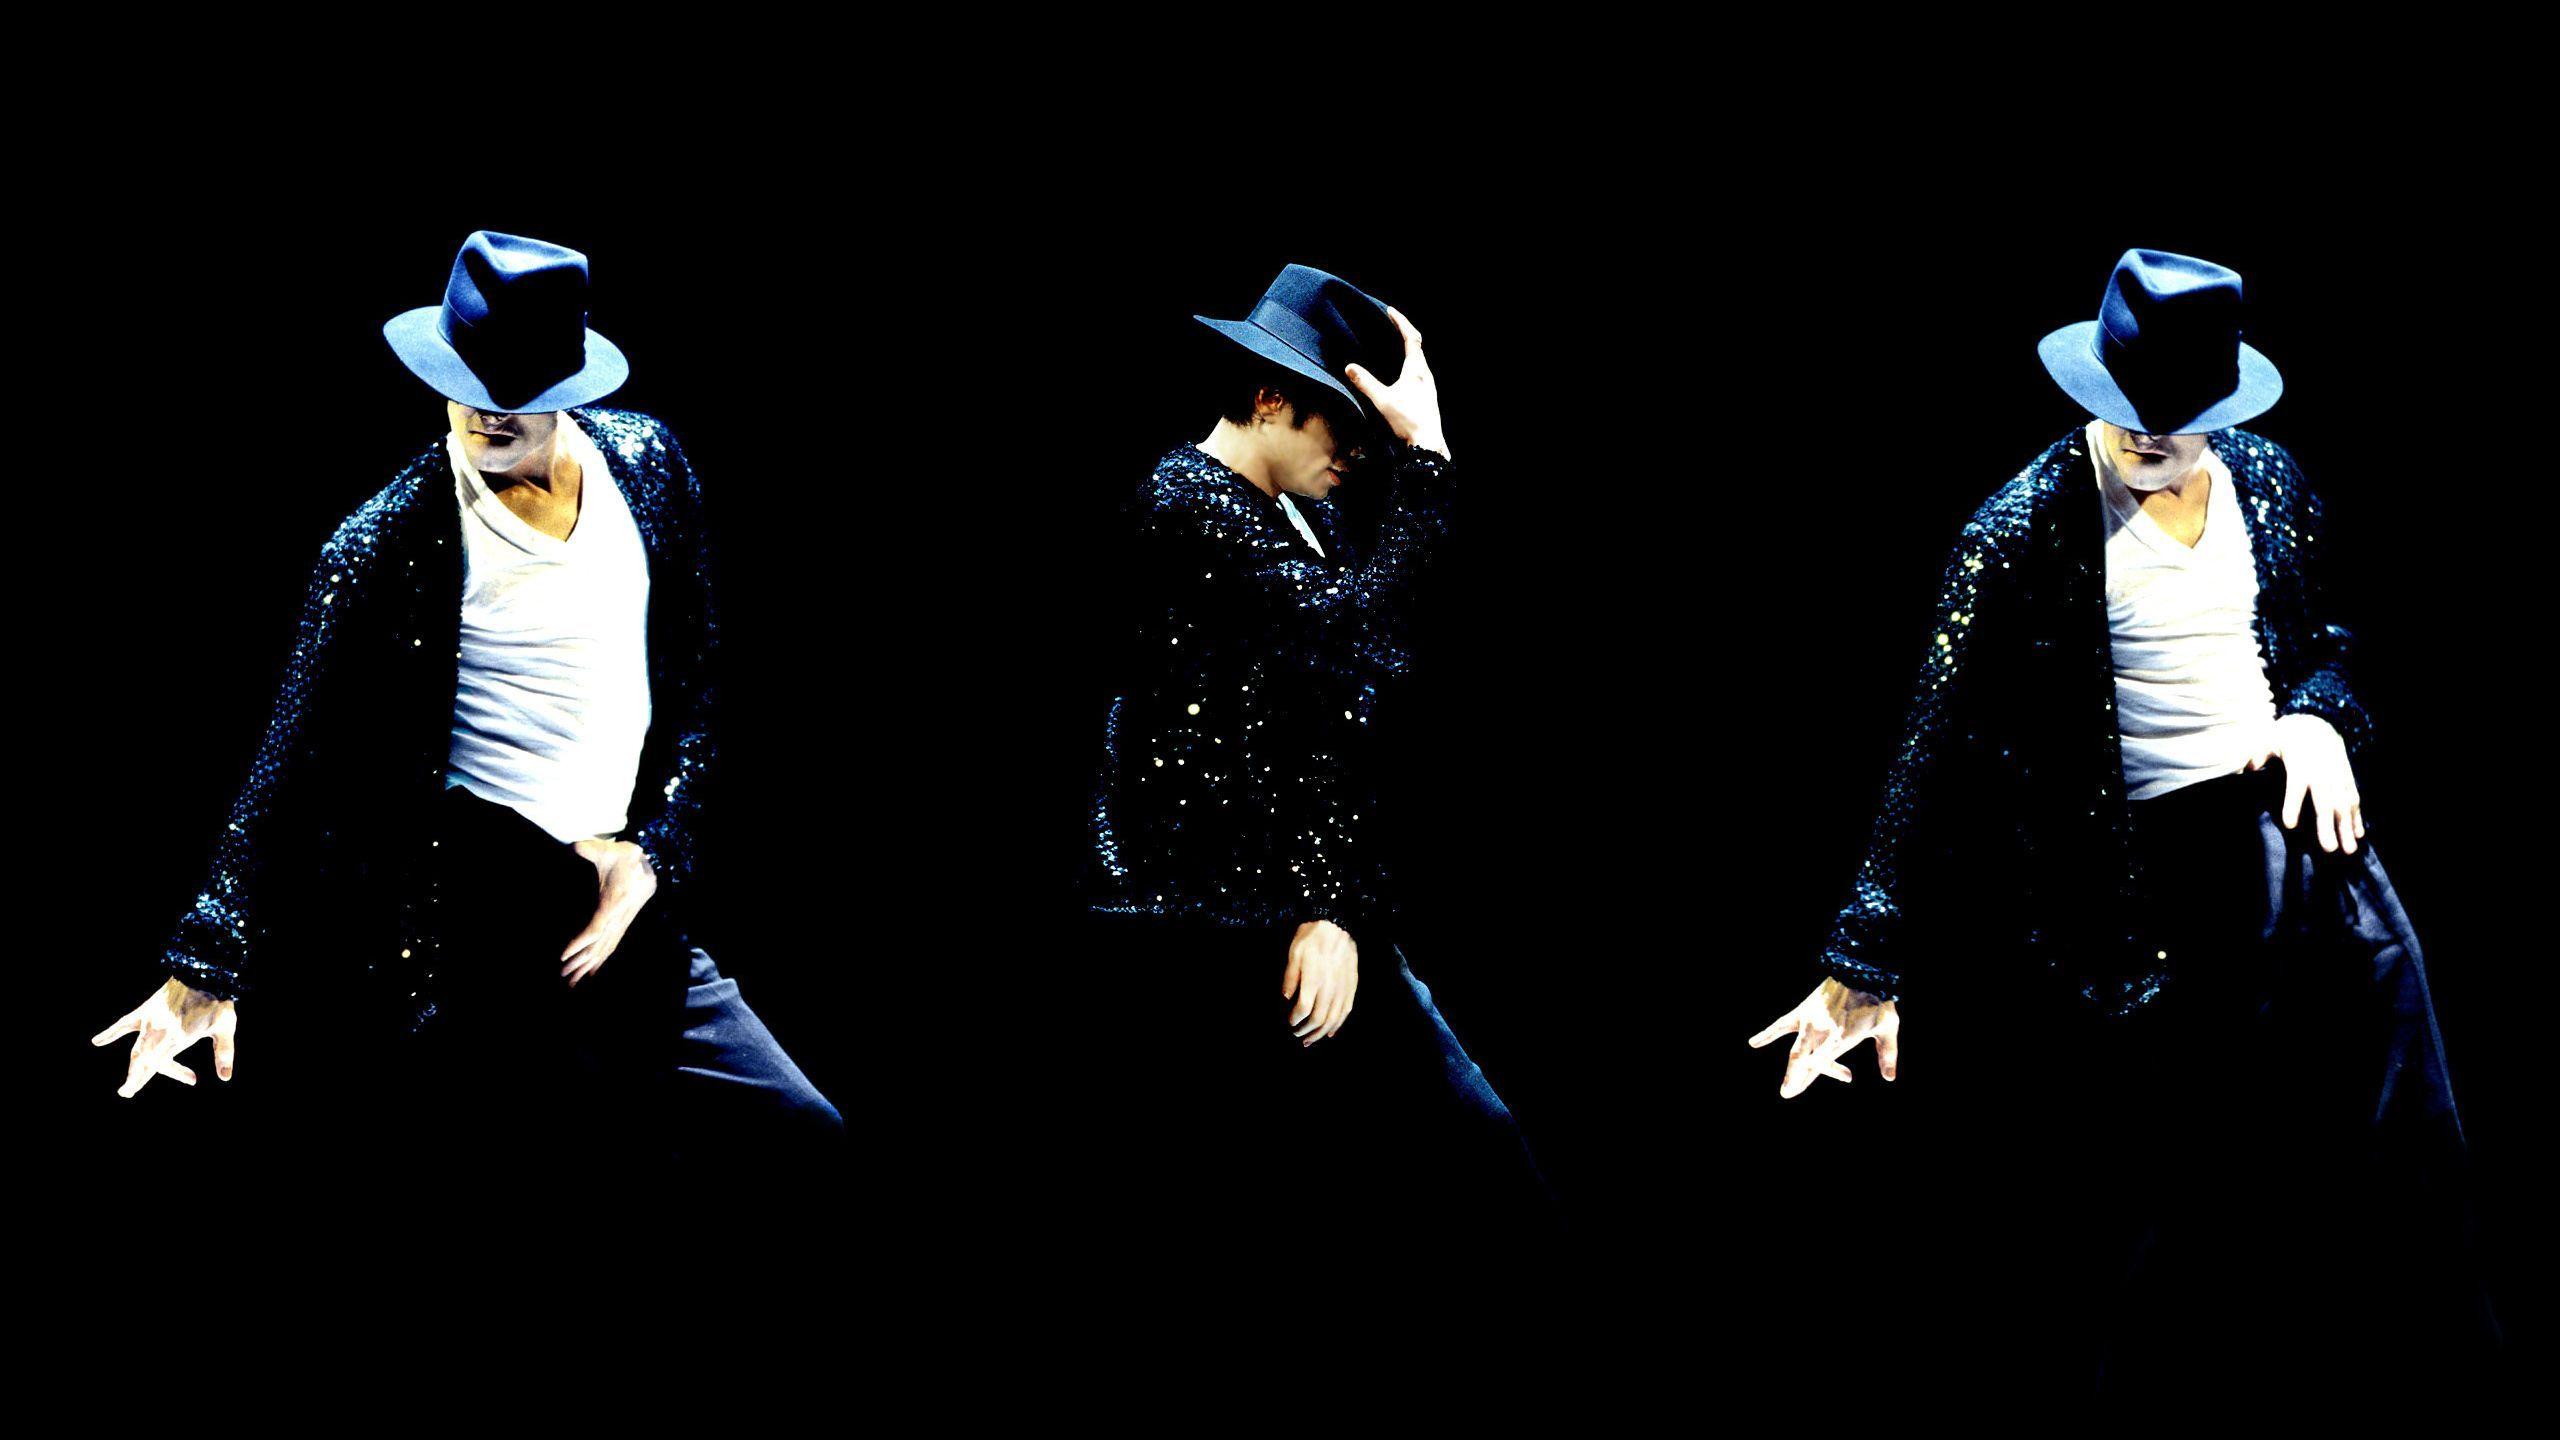 Michael Jackson Dance Wallpaper. HD Wallpaper. Michael jackson